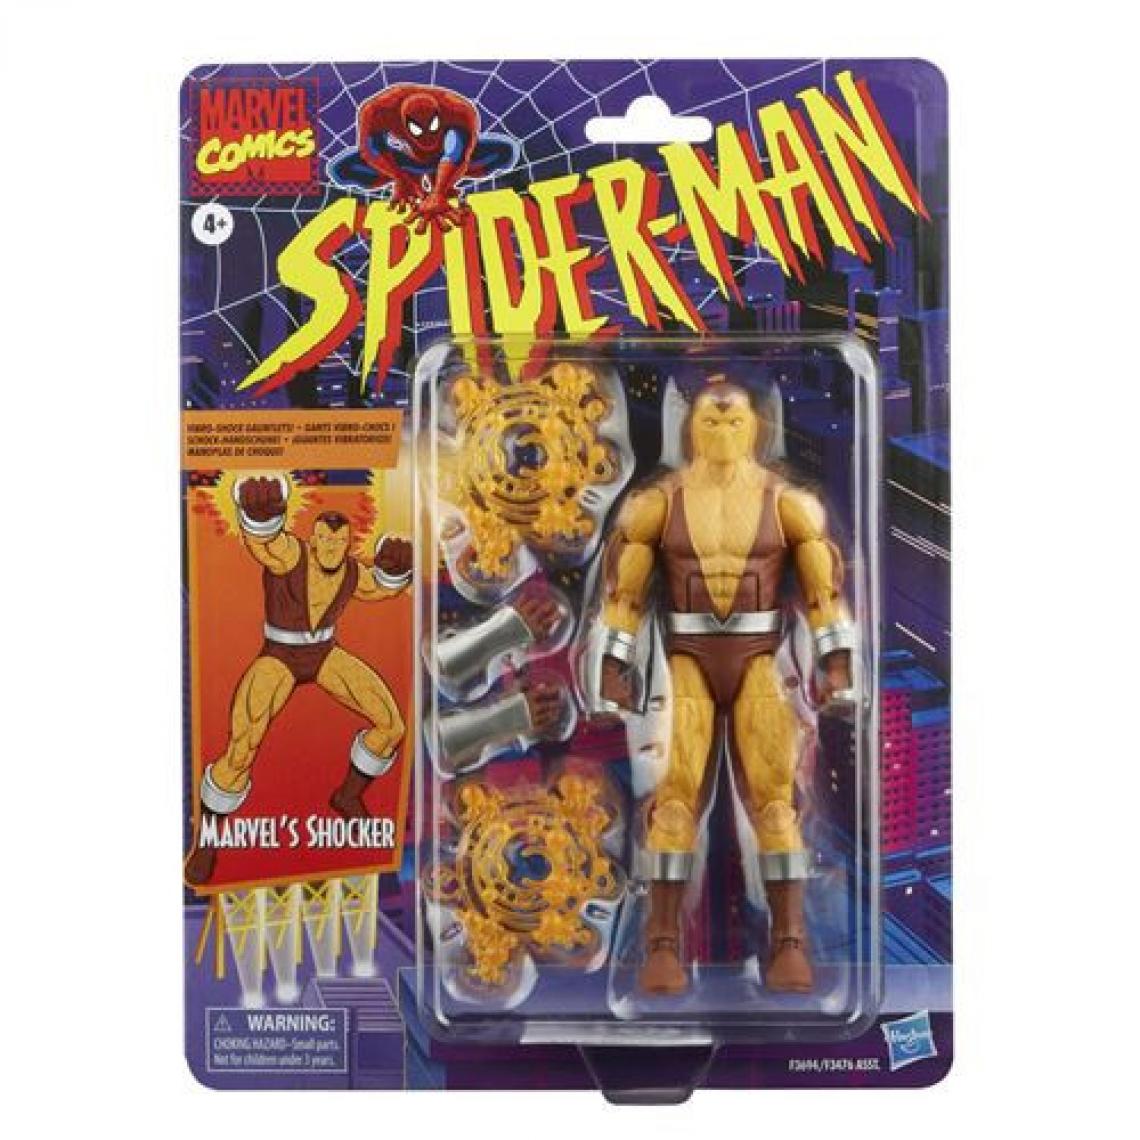 Spiderman - Figurine Spiderman Marvel Legends Series Marvel's Shocker - Animaux